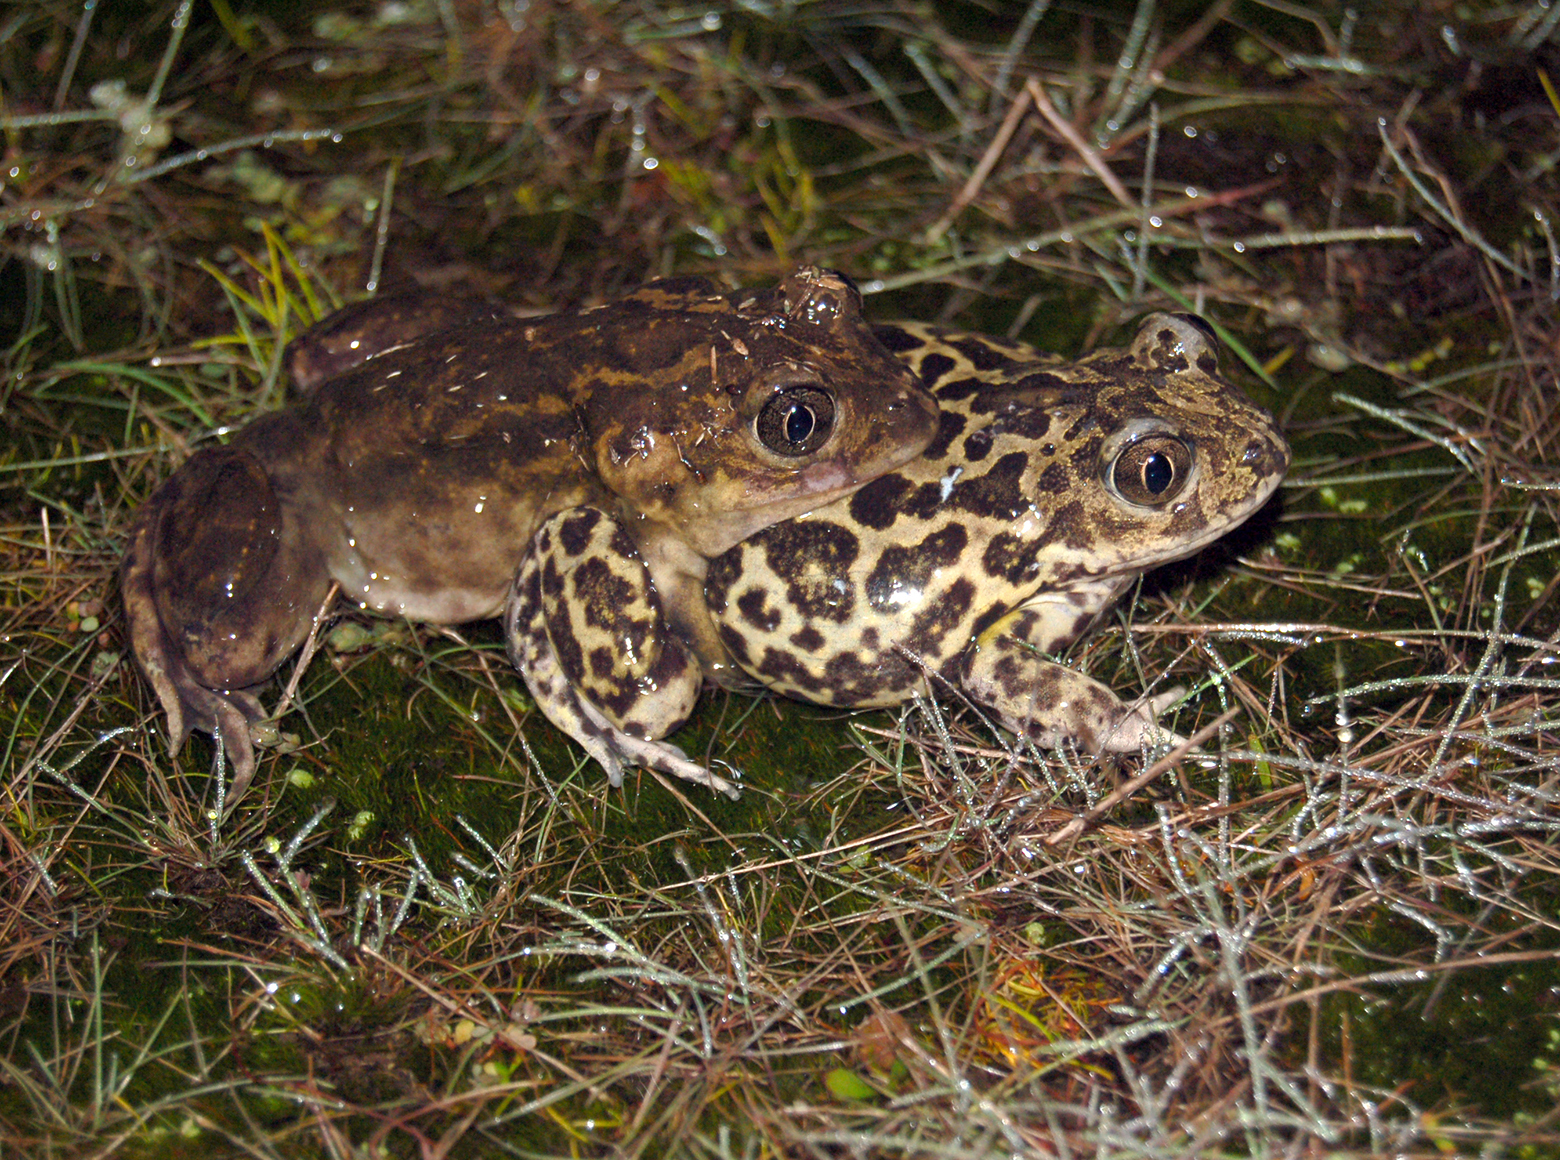 Pair of Pelobates toads